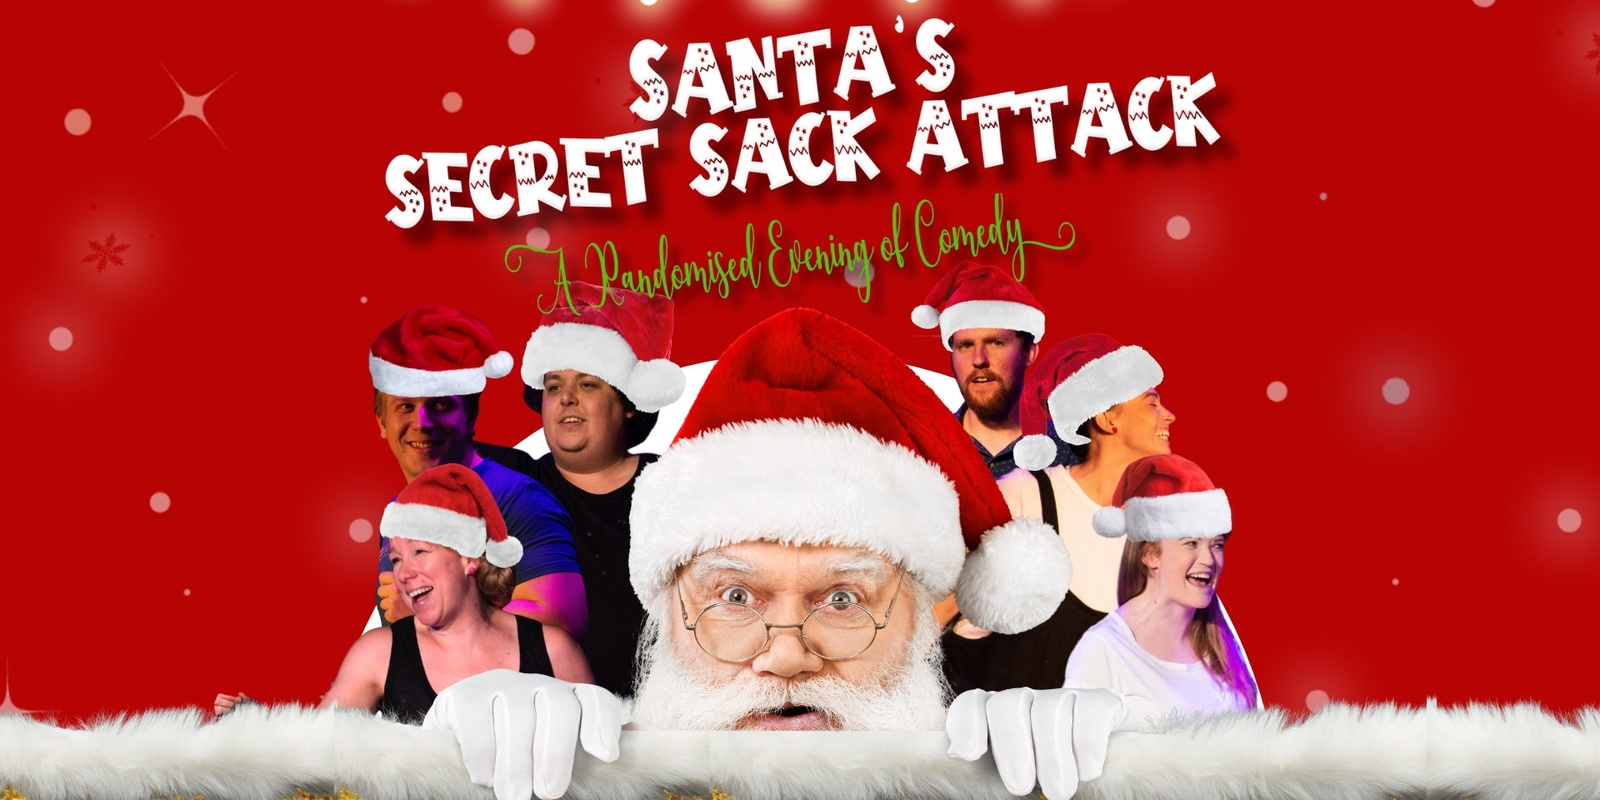 Banner image for Santa's Secret Sack Attack: An Evening of Randomised Comedy